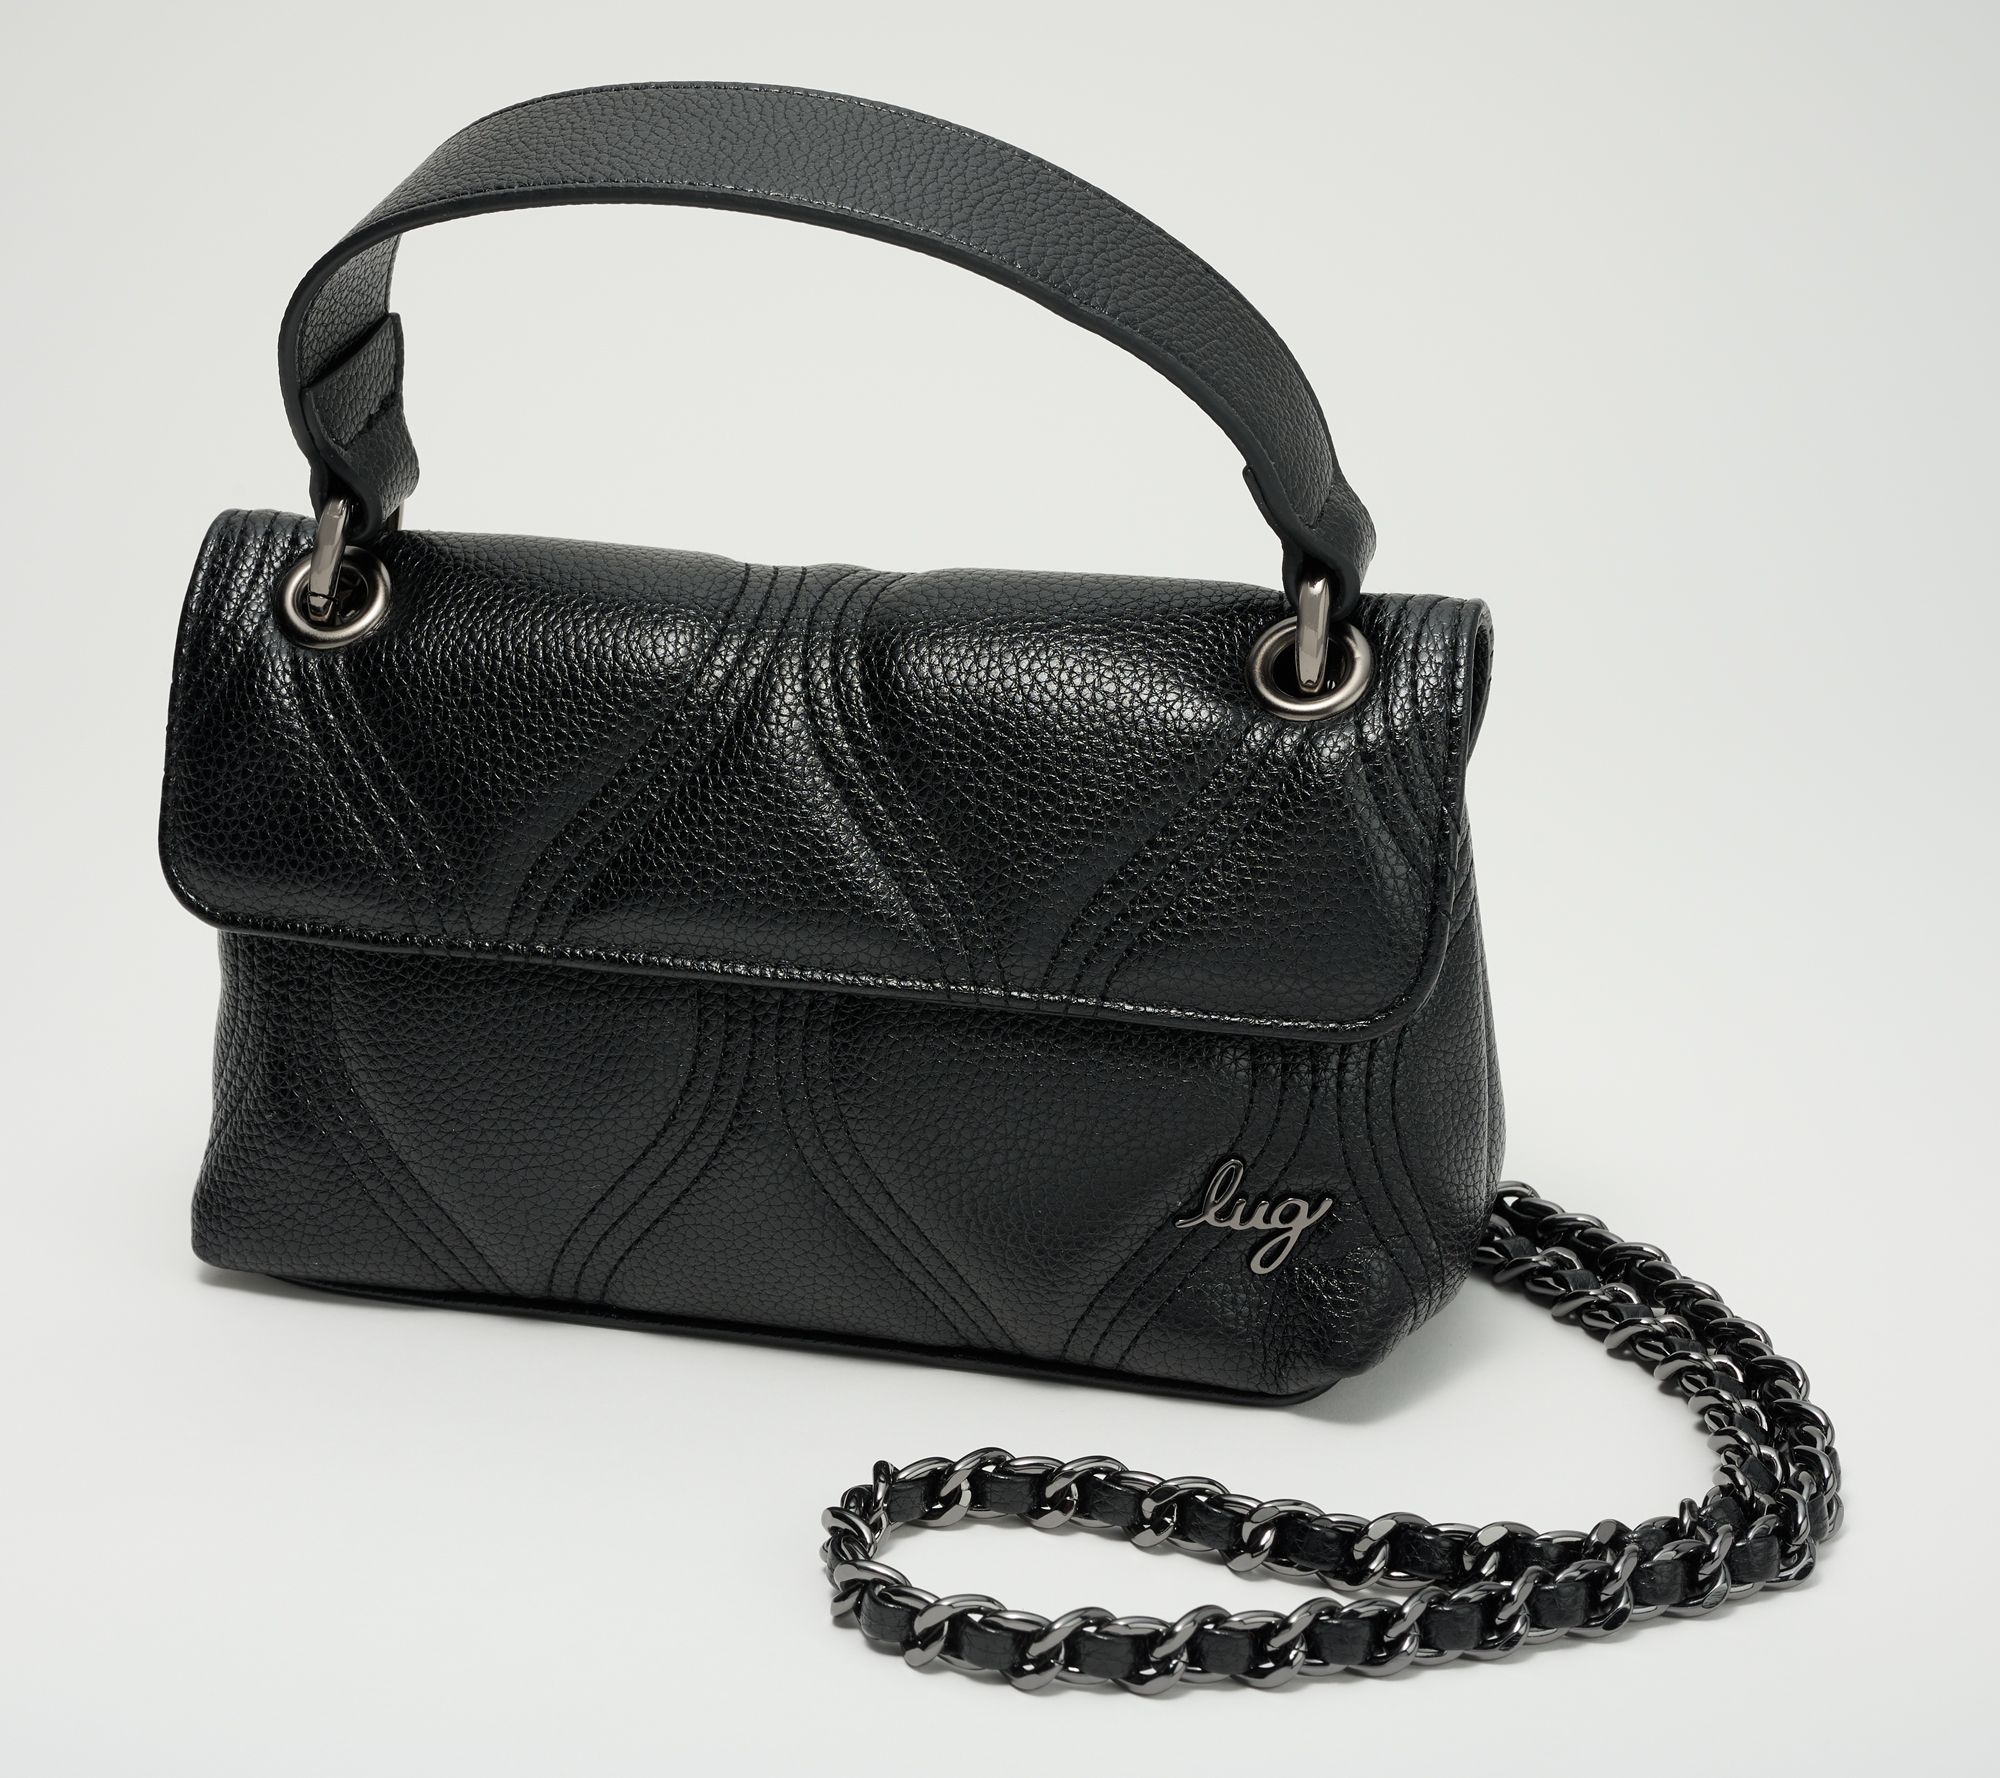 DKNY Saffiano Leather Large Work Shopper, $345, DKNY